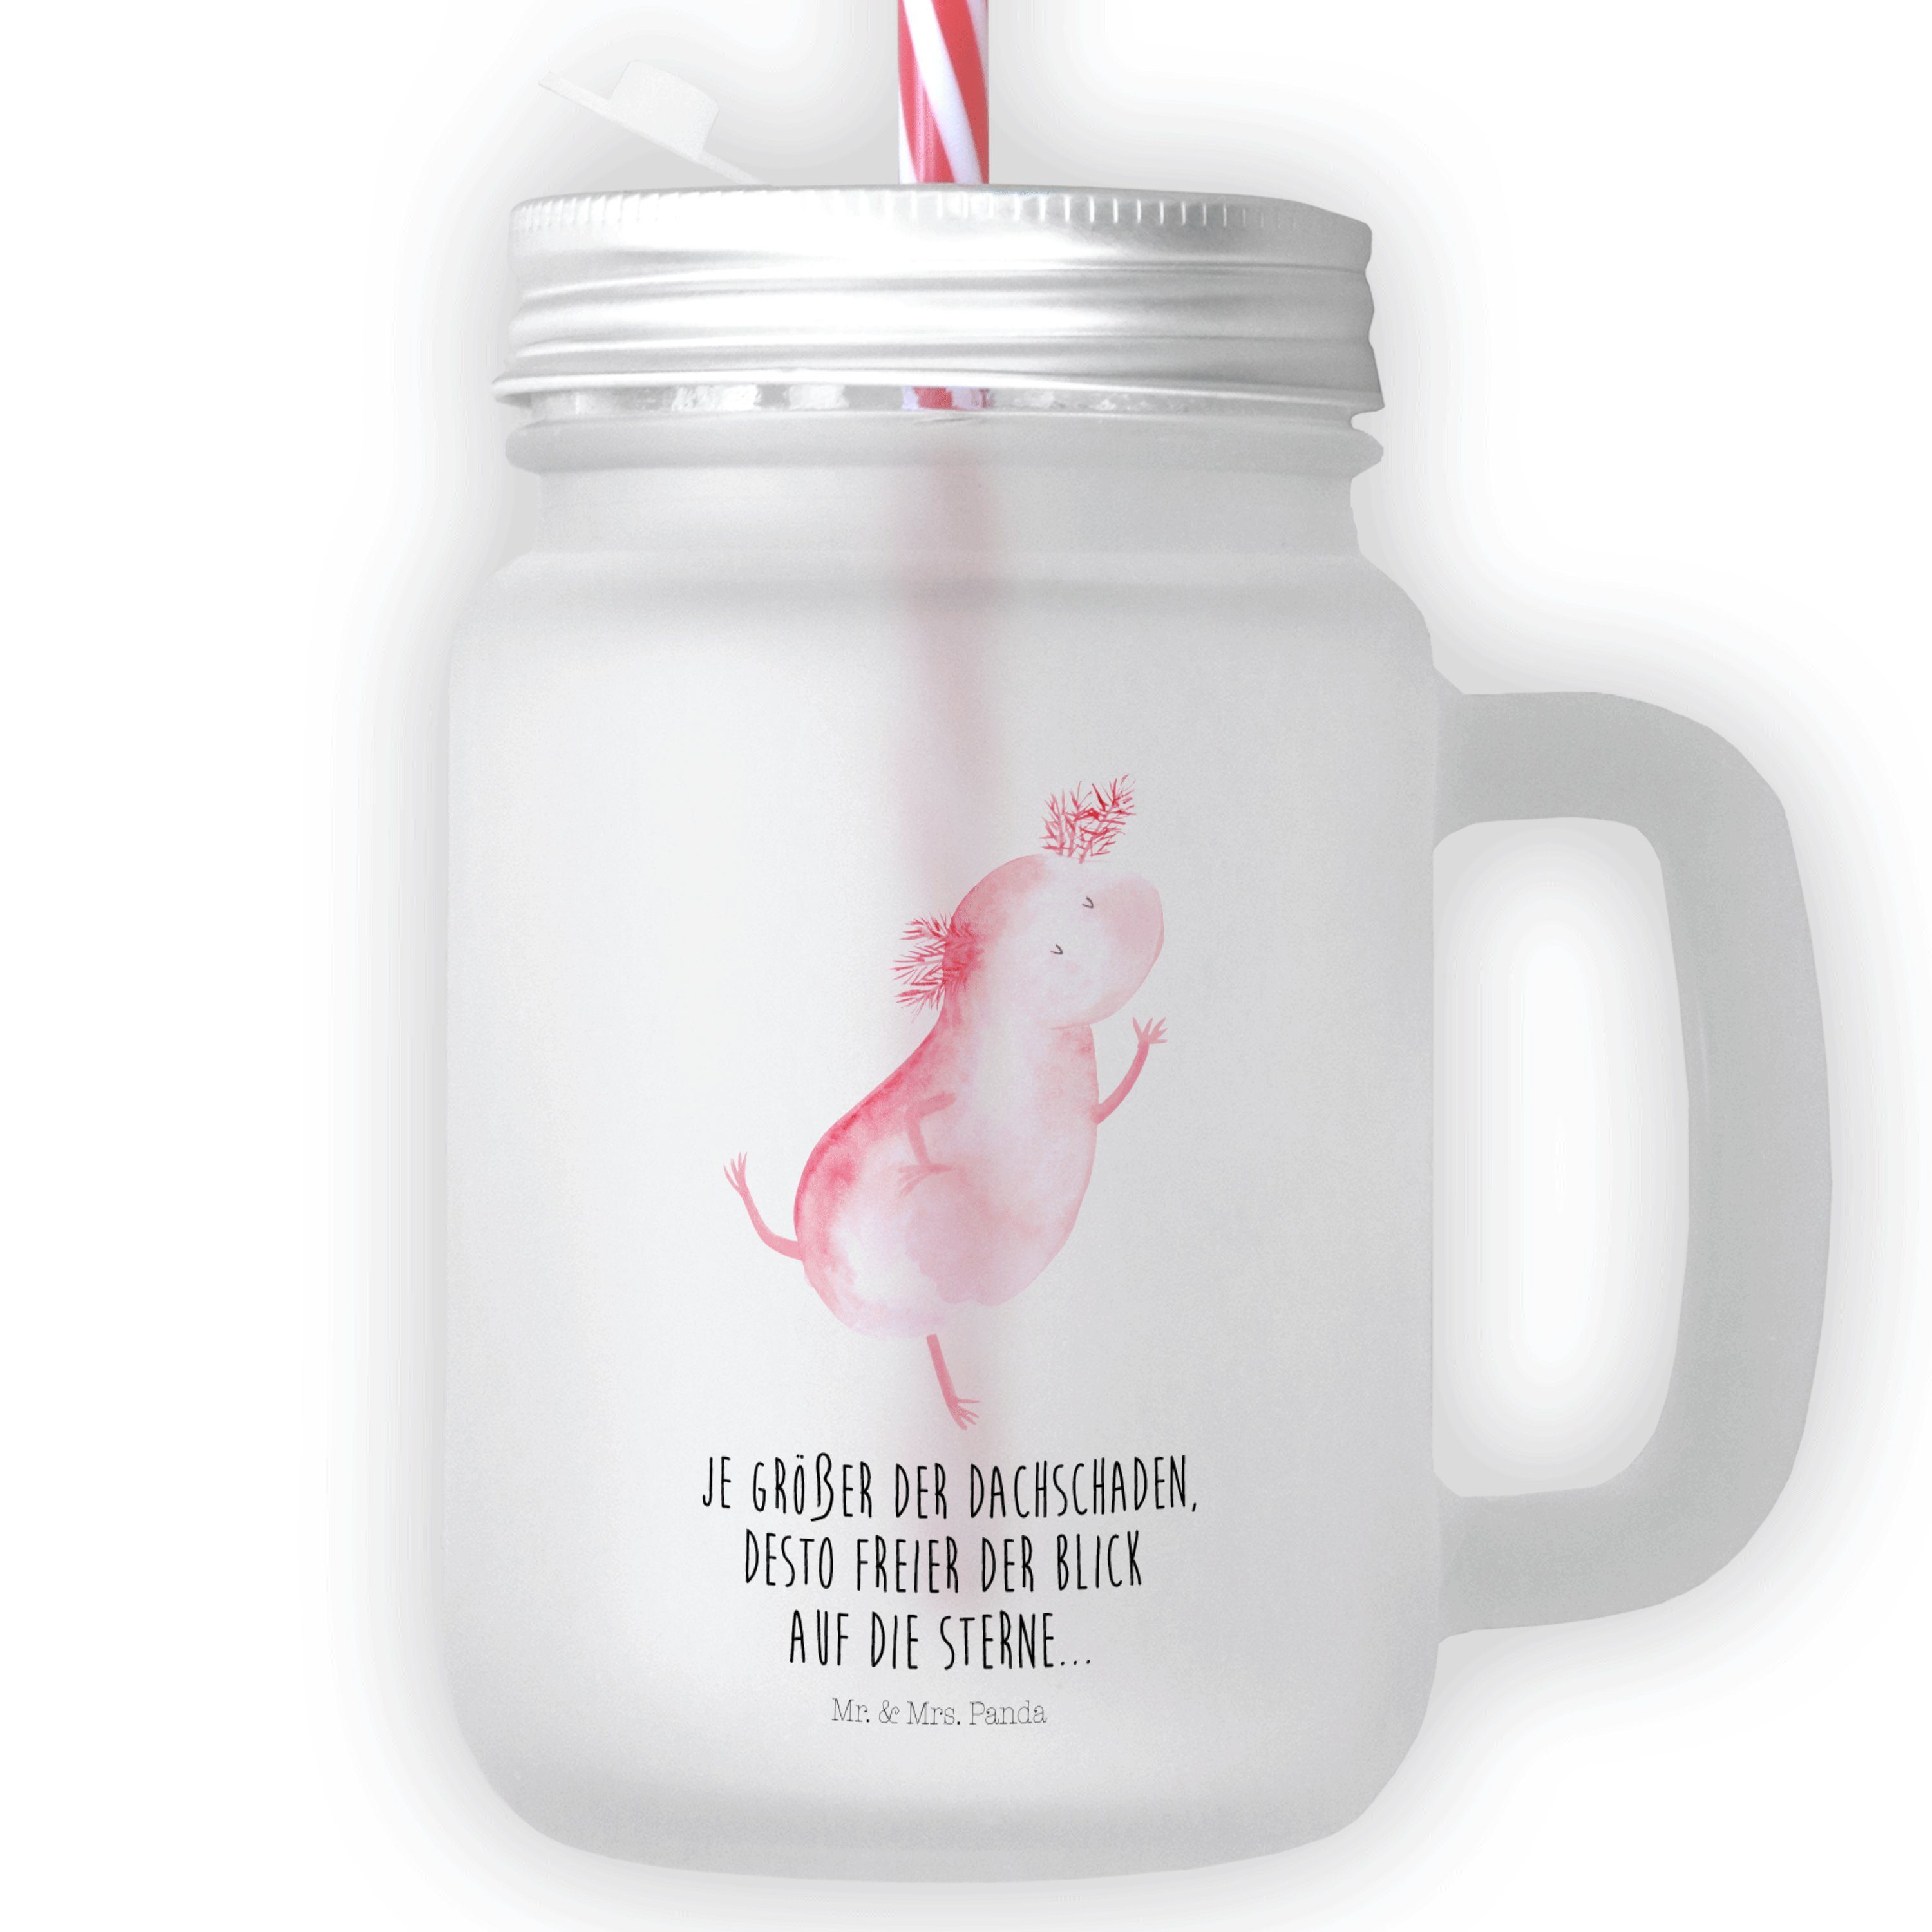 Mr. & Mrs. Panda Glas Axolotl tanzt - Transparent - Geschenk, Mason Jar, Satiniertes Glas, Premium Glas